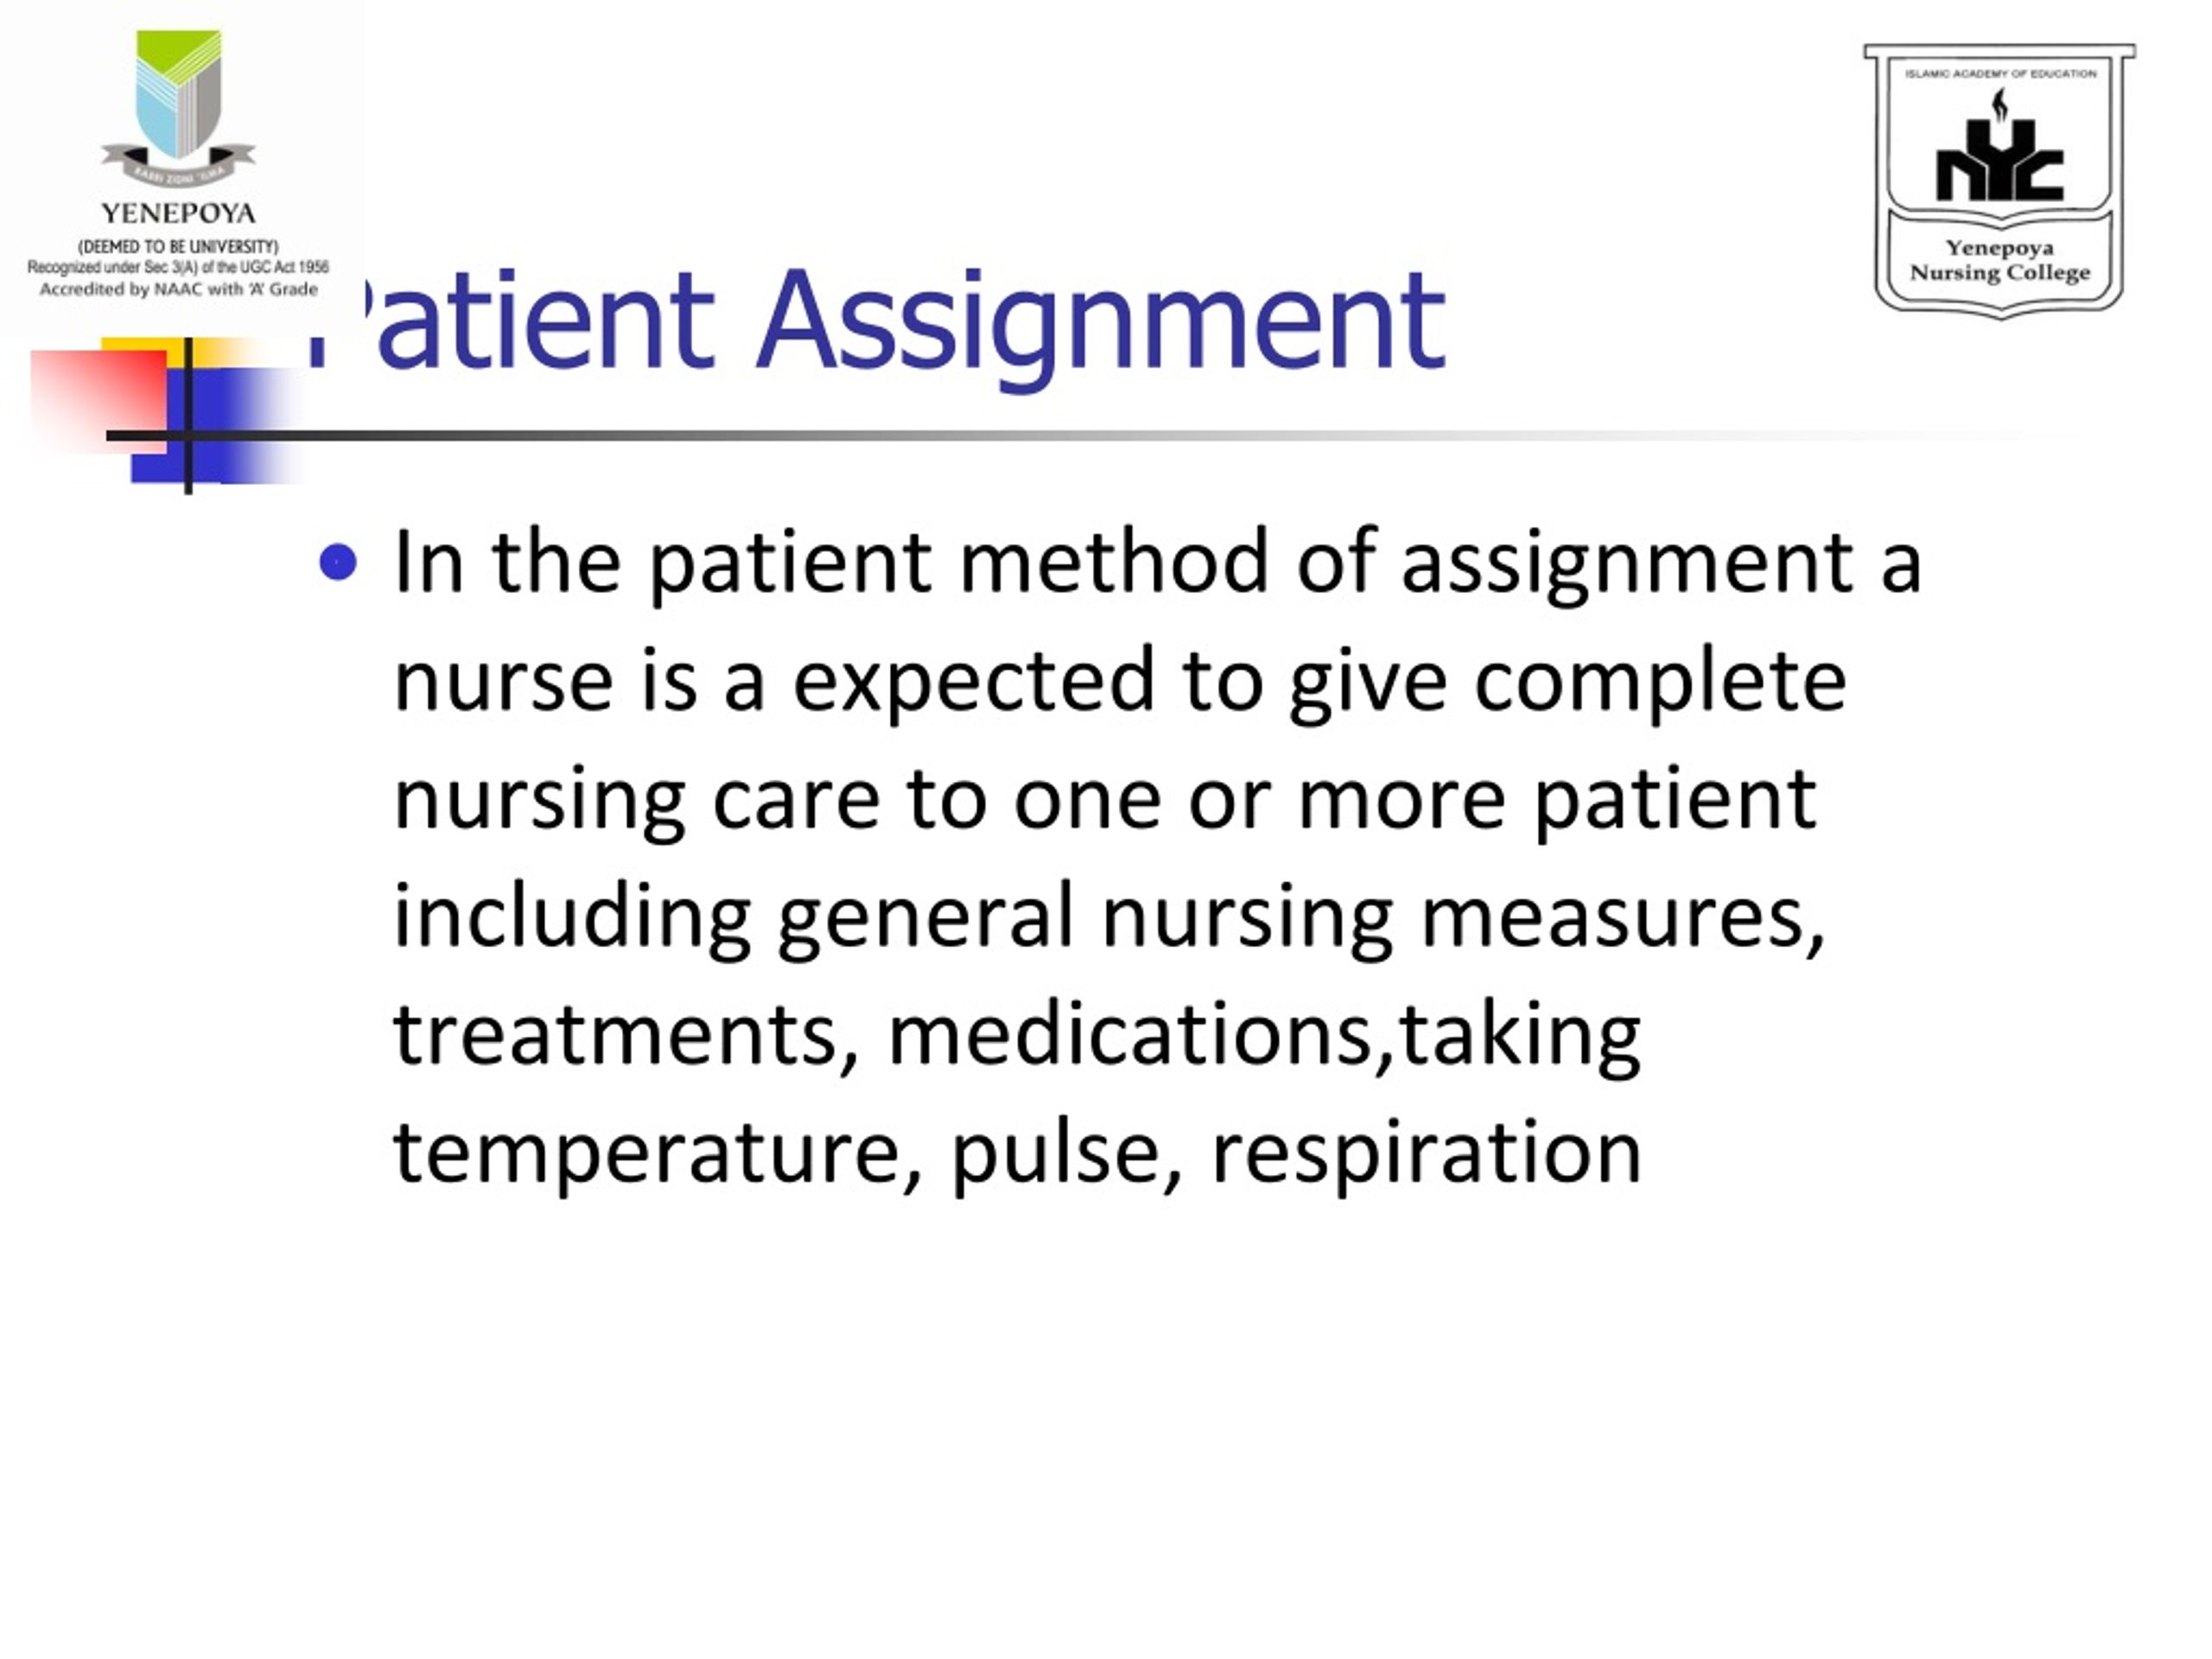 assignment quiz chapter 26 patient accounts